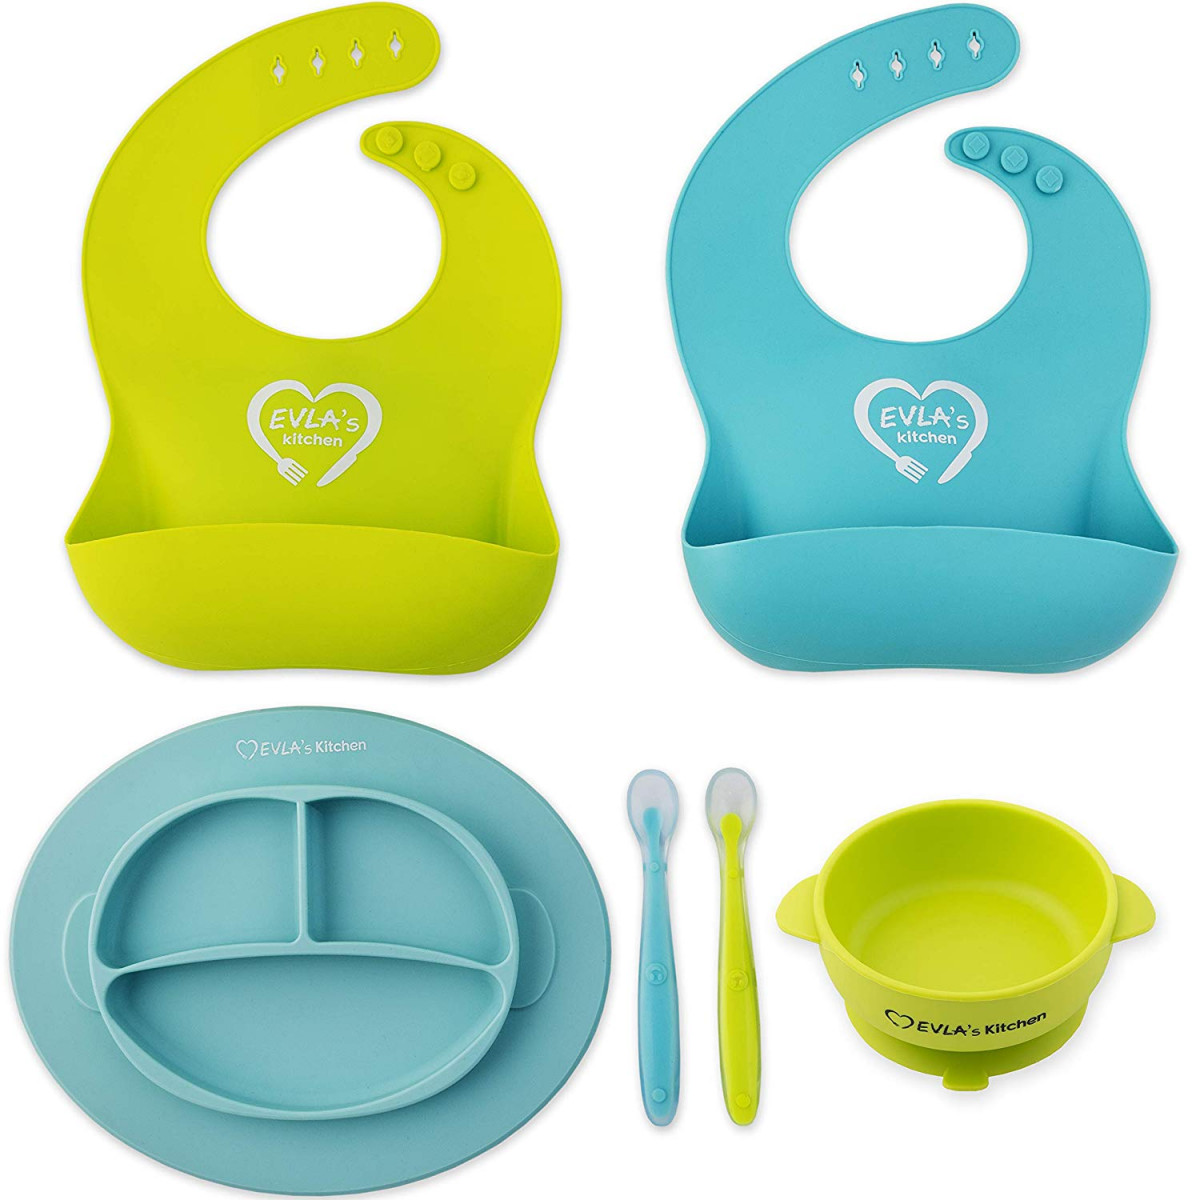 EVLA'S Baby Feeding Set | Silicone Bib Plates Bowls Spoons | Divided Plate Suction Bowl & Soft Spoon Aids Self Feeding | Adjustable